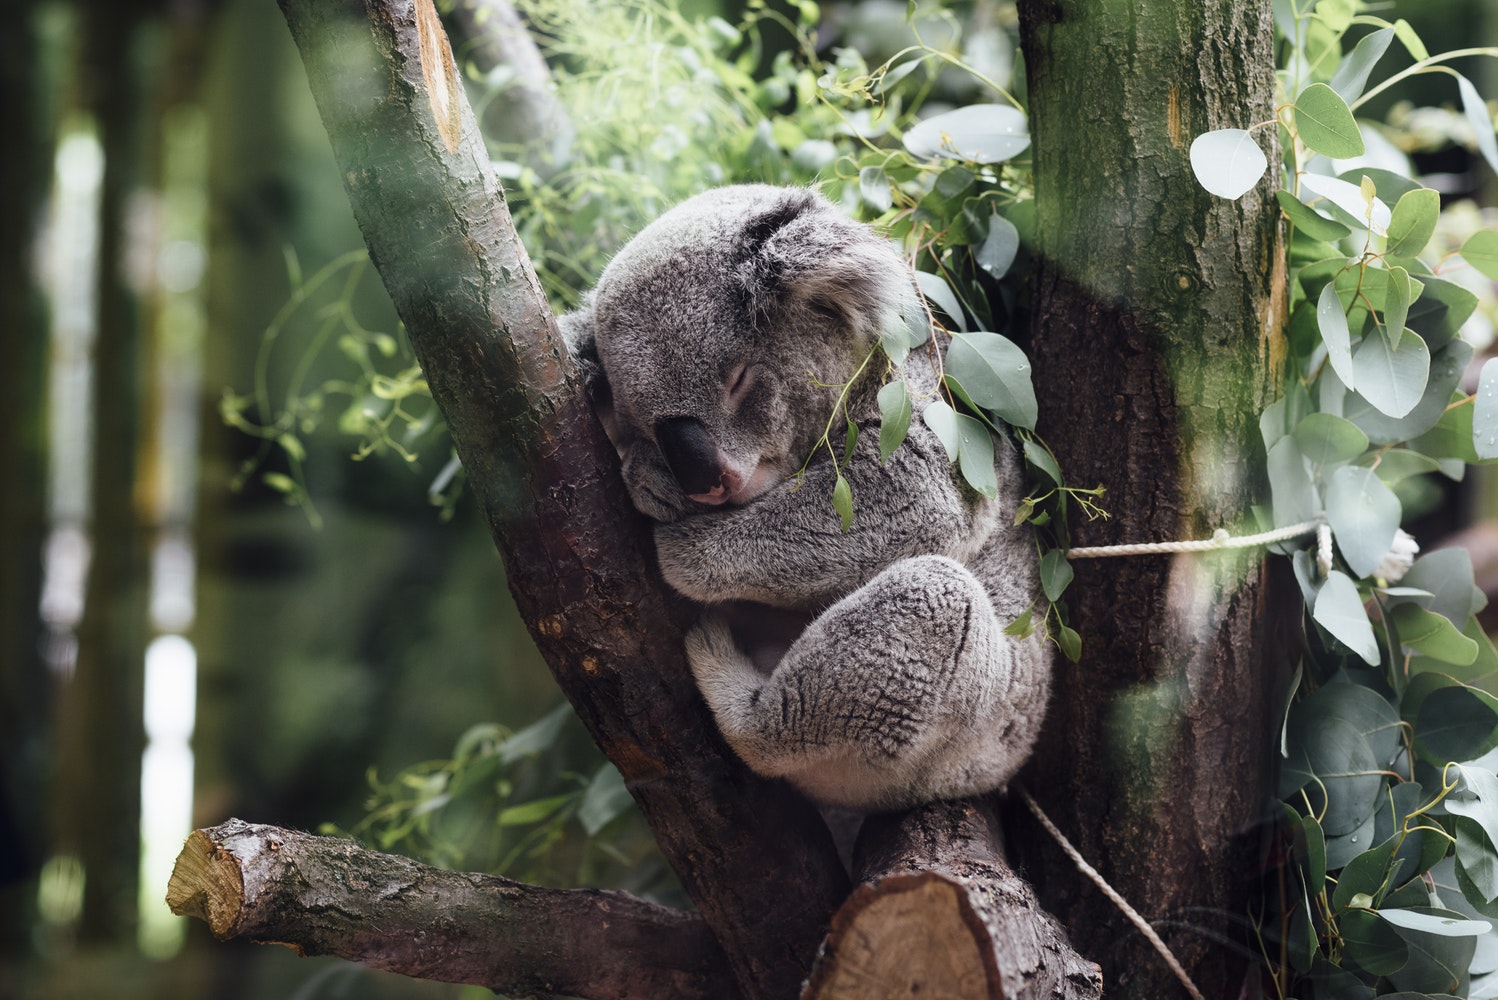 A photo of a koala asleep in a tree.